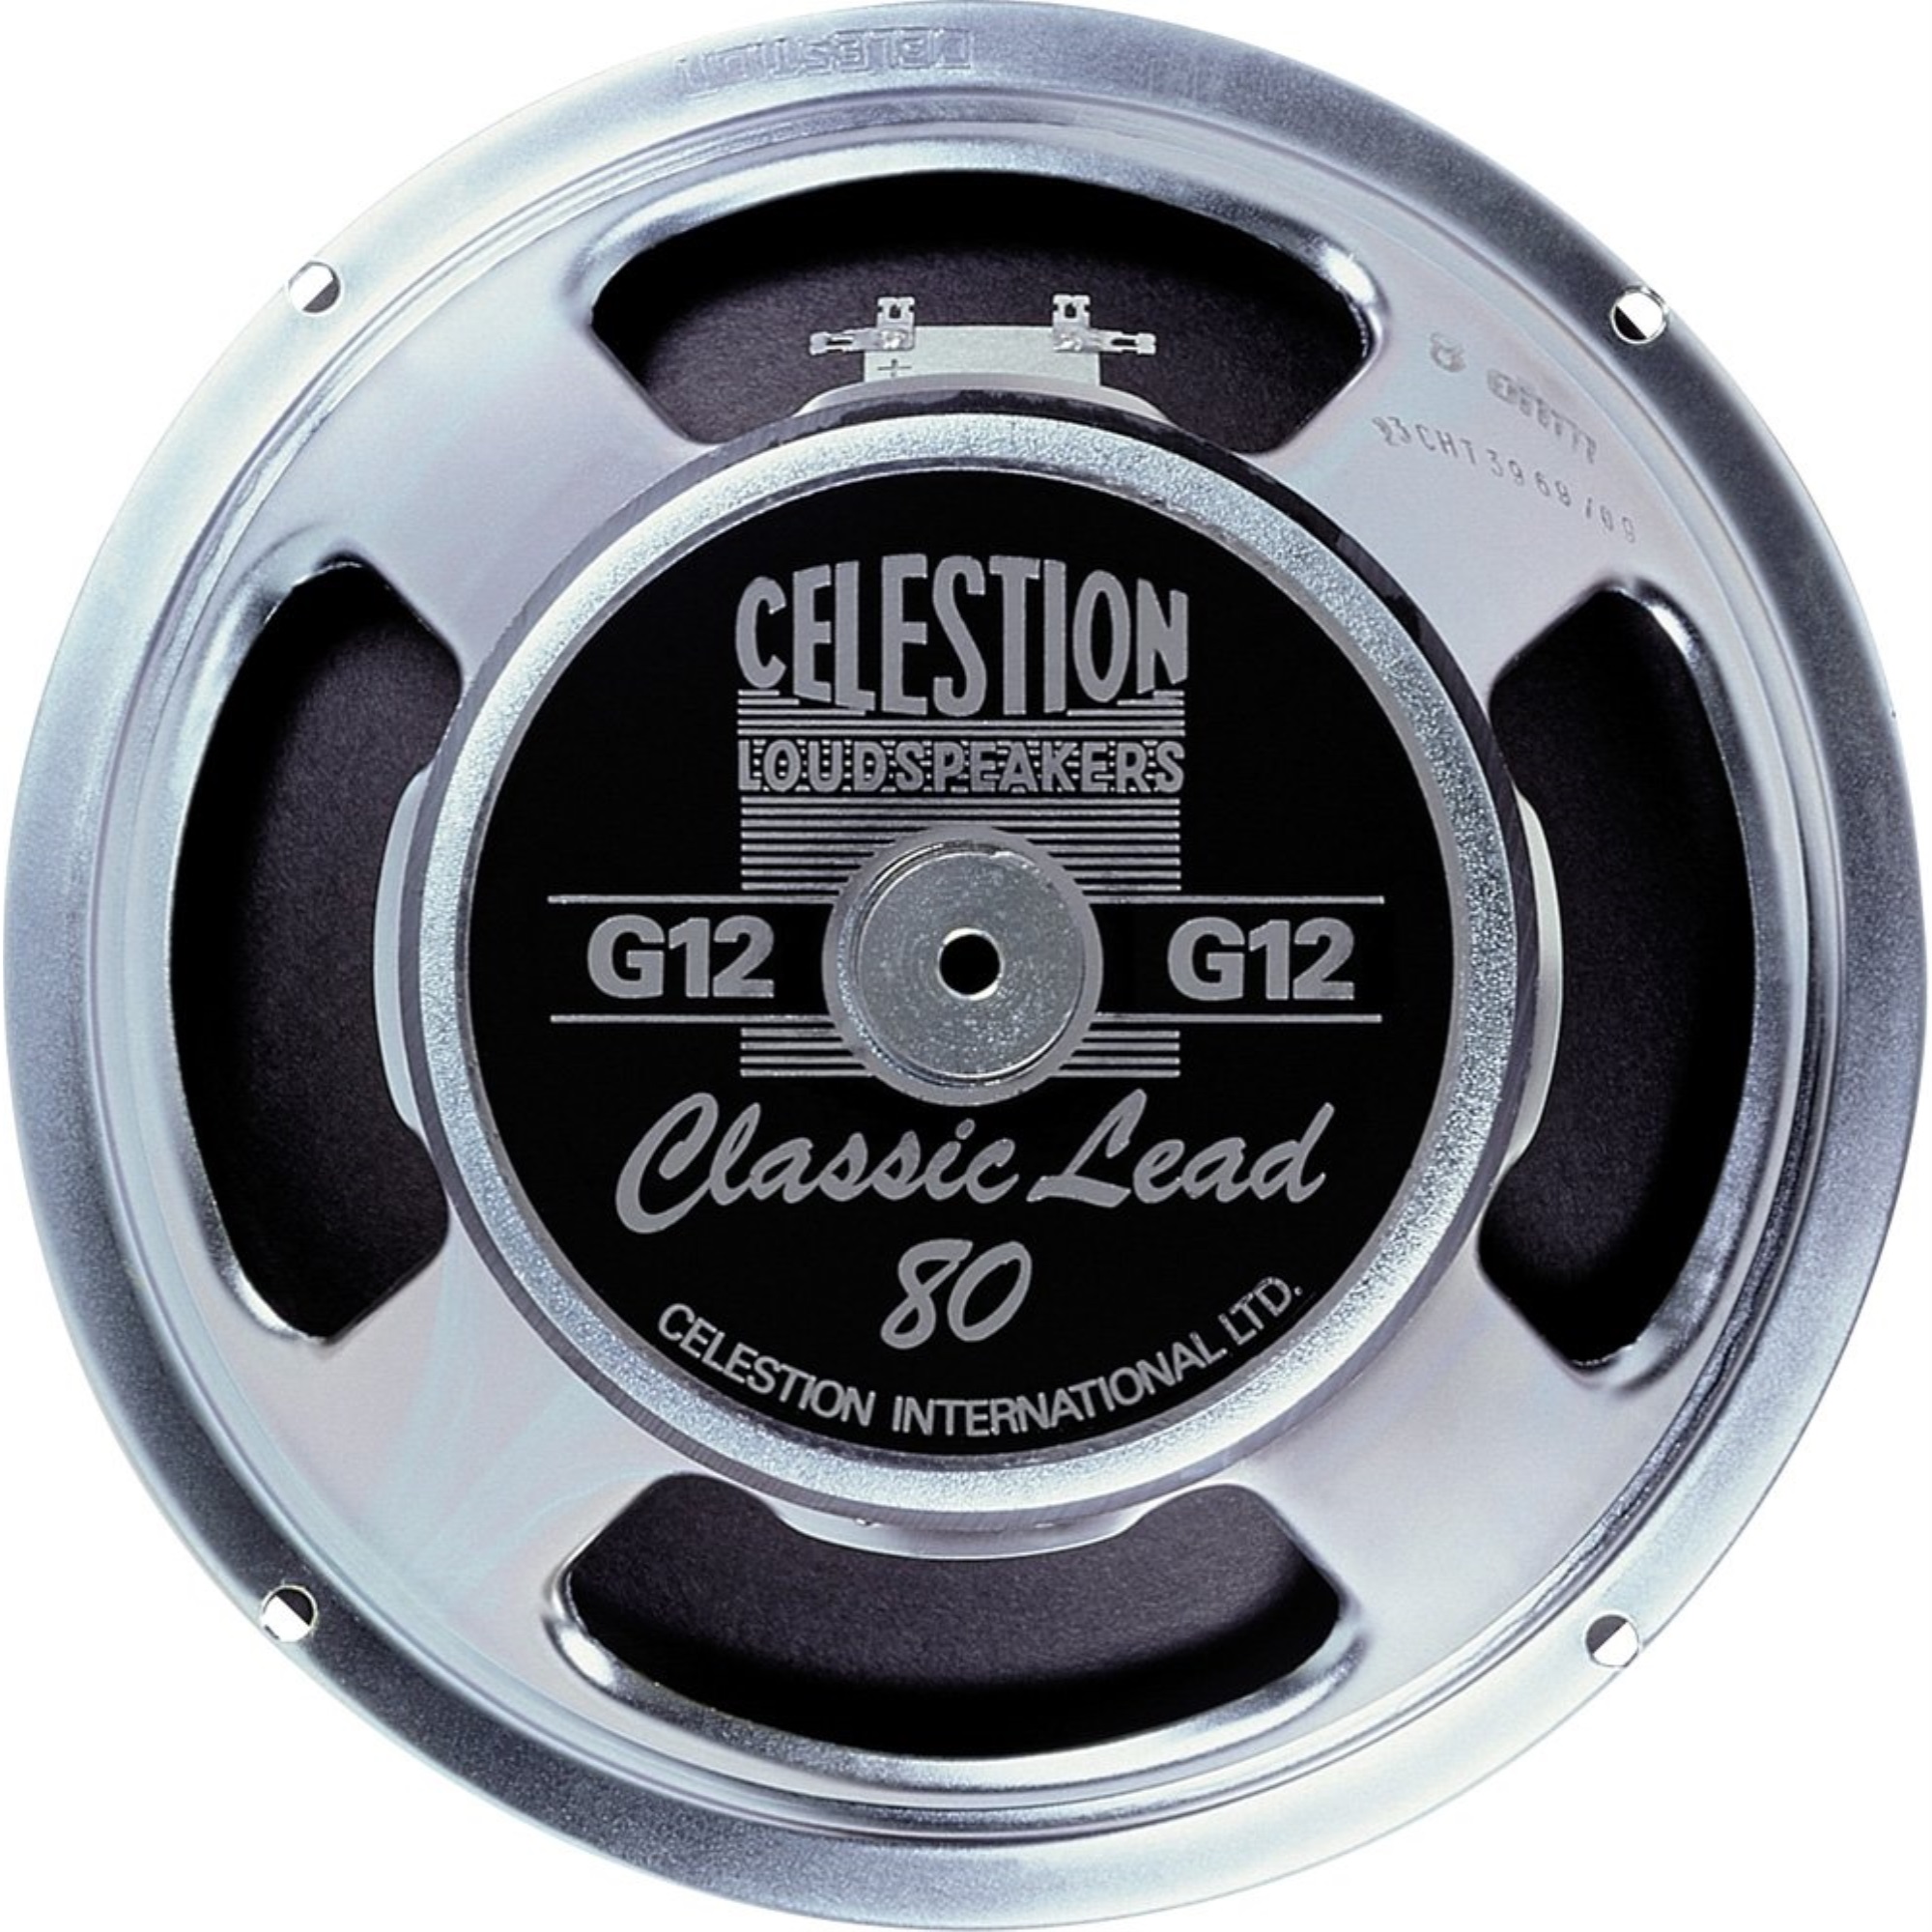 Celestion Classic Lead 80 12” 16 Ohm Guitar Speaker - image 1 of 2